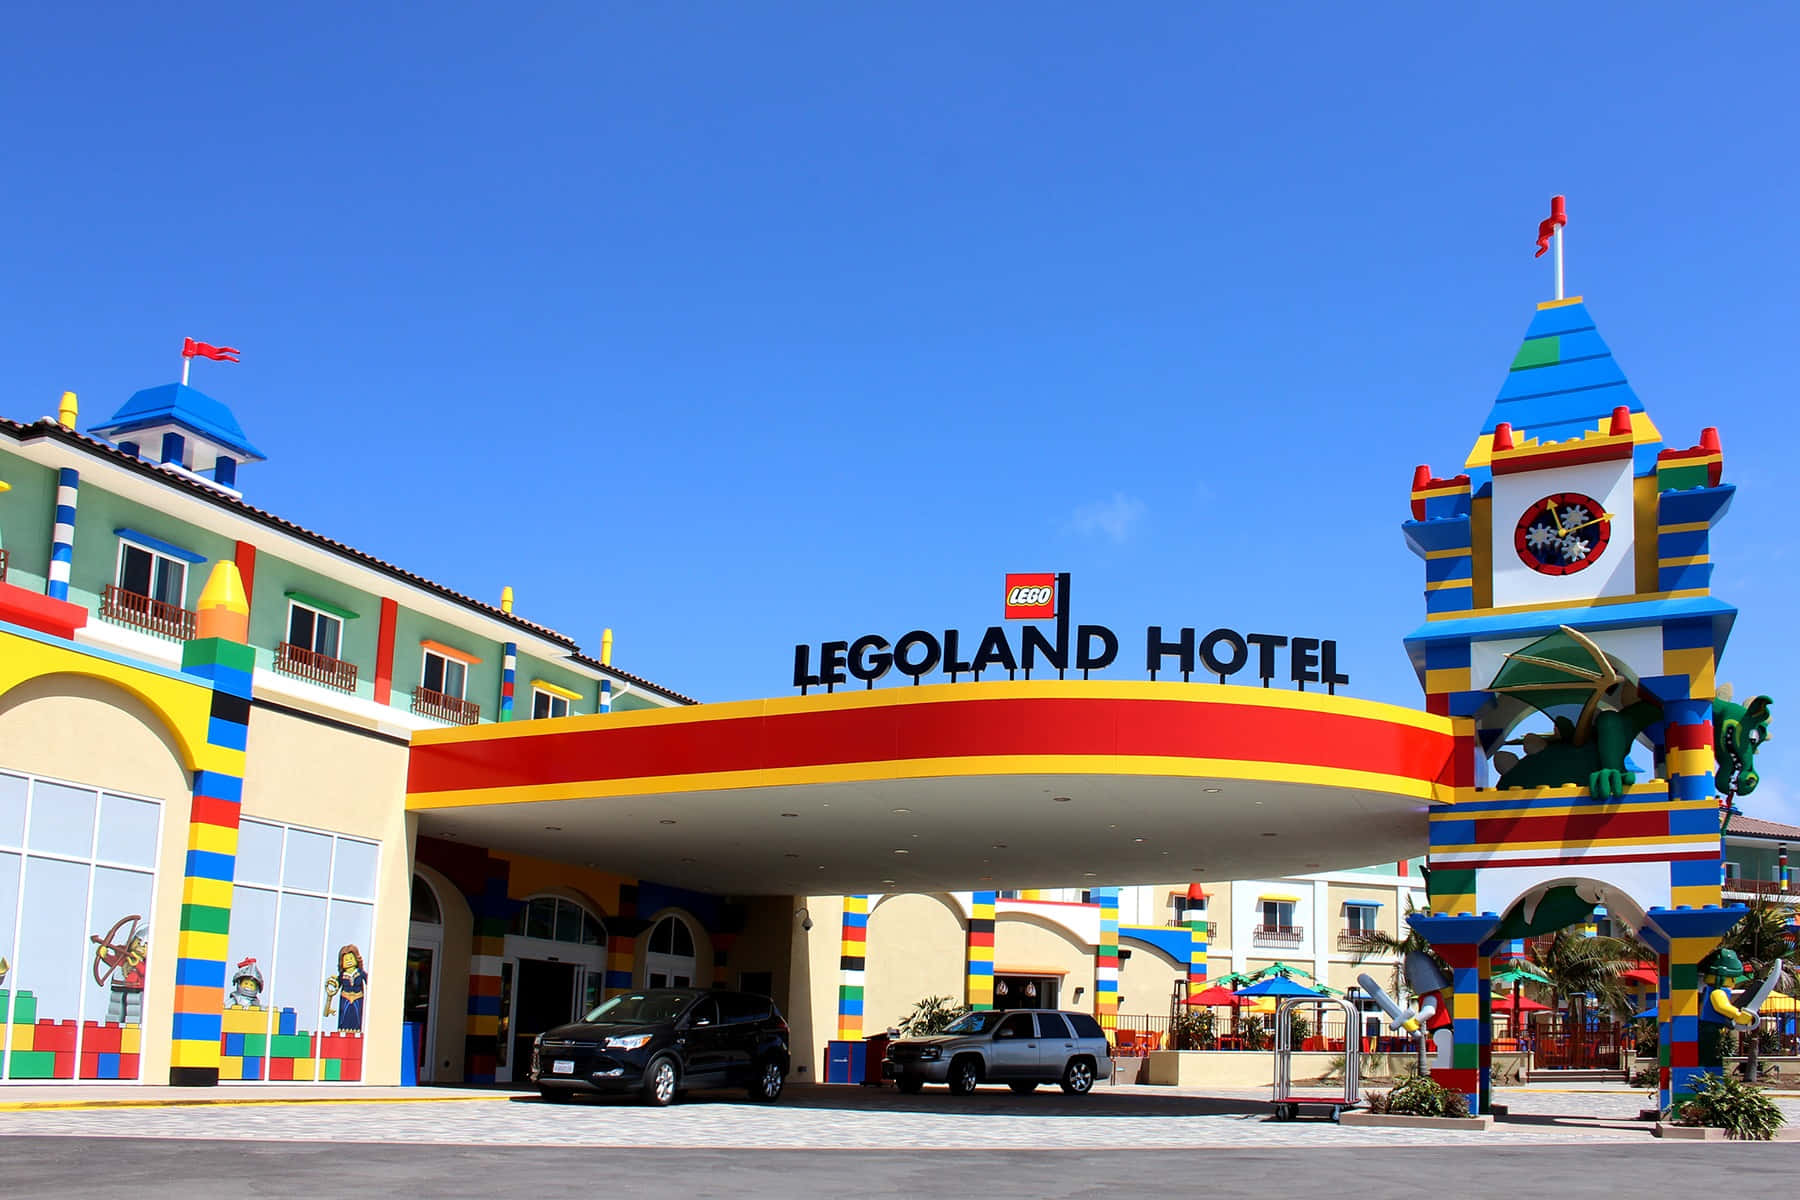 "Explore the Fun of Lego at Legoland!"